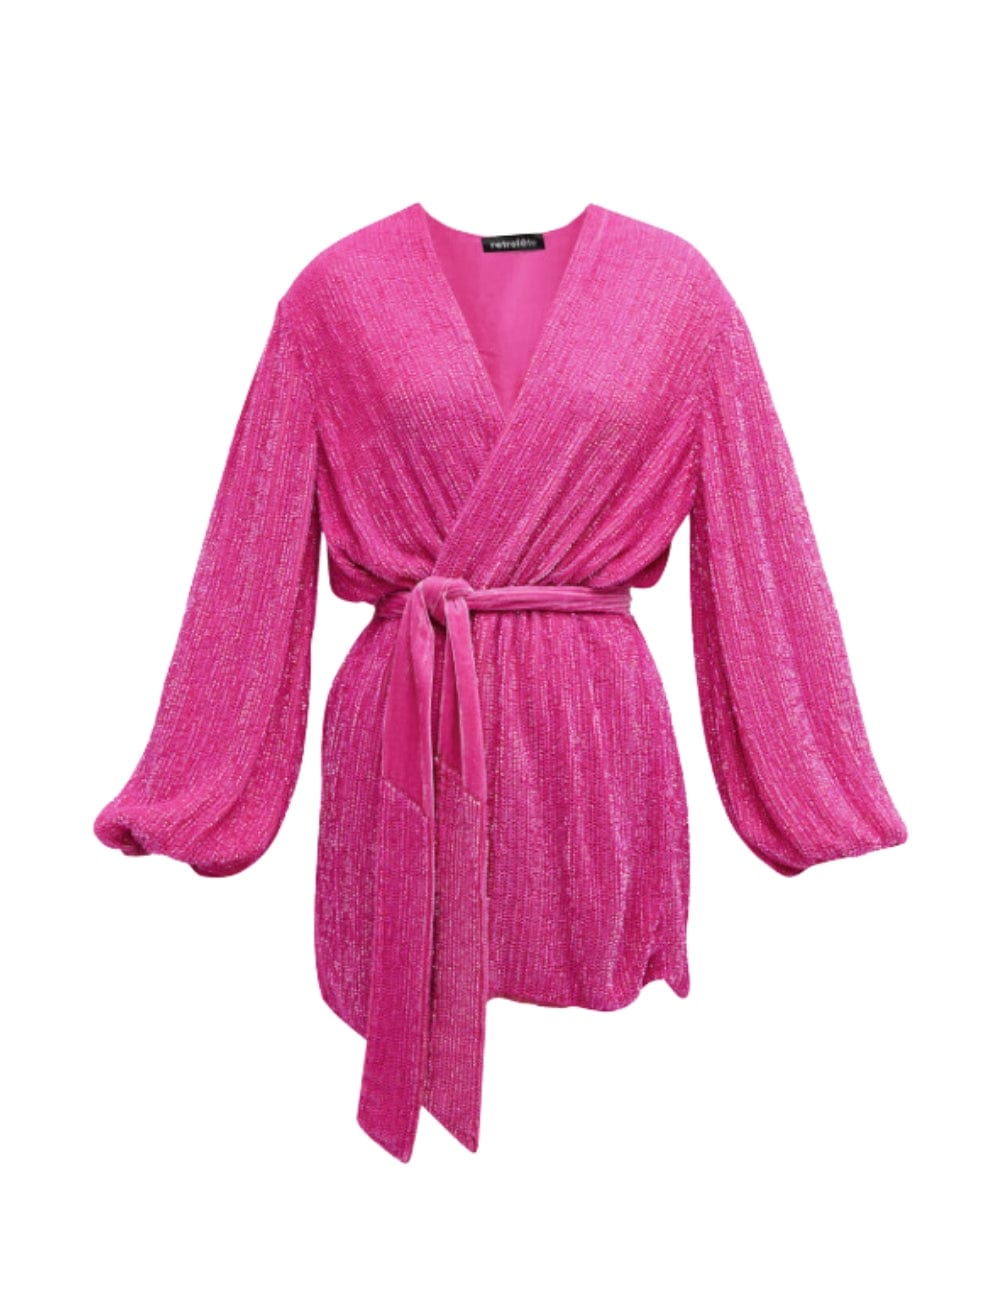 Gabrielle Robe Dress in Pink